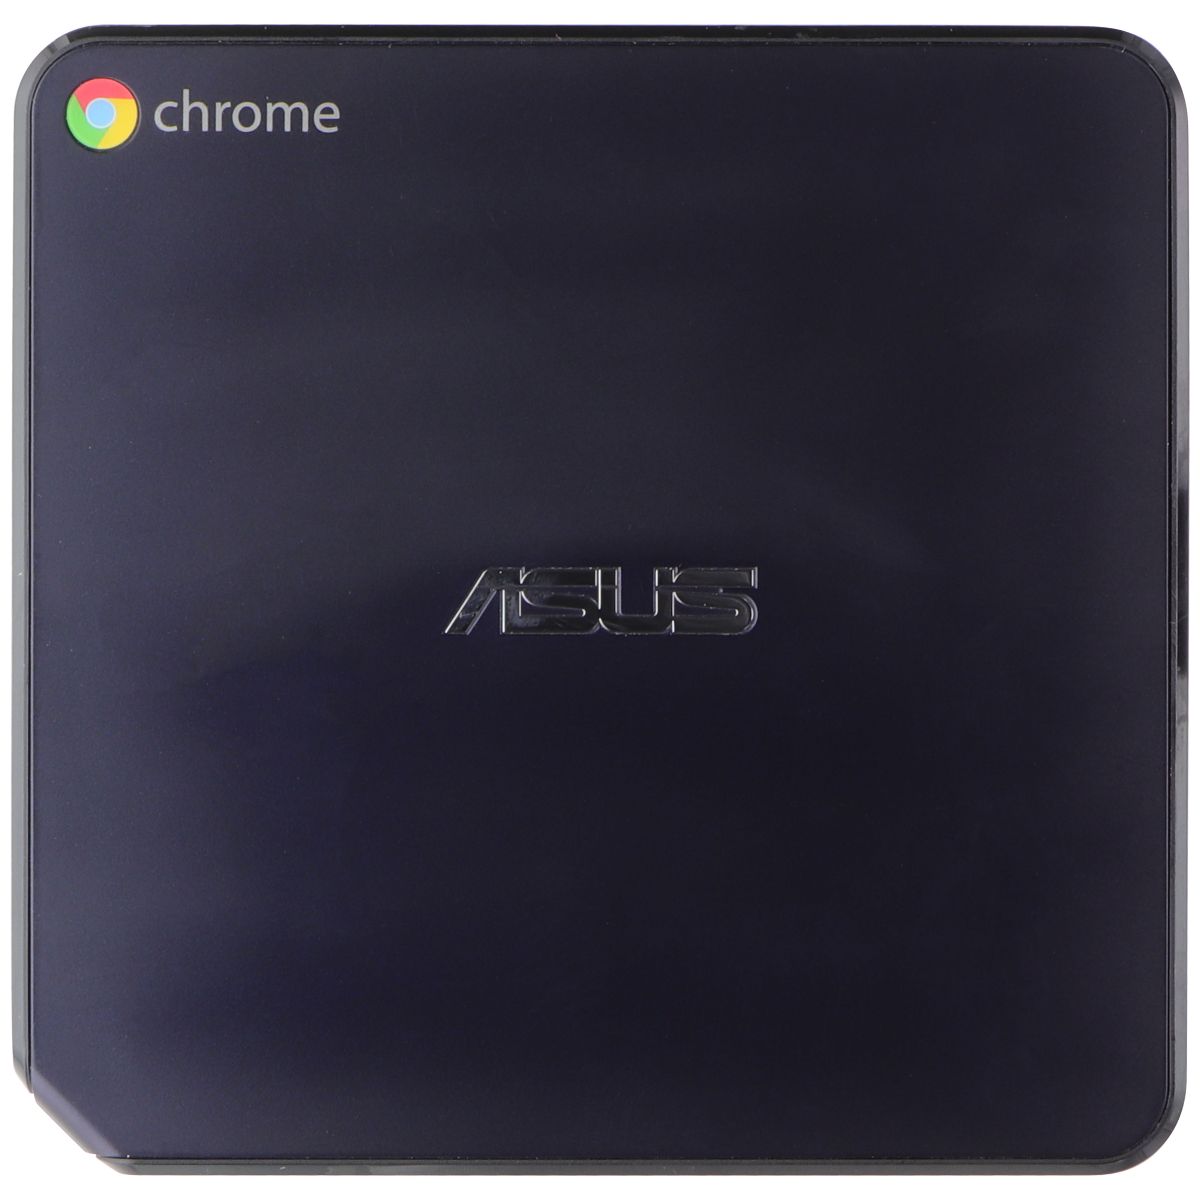 Asus Chromebox CN62 Mini Desktop PC - Intel Celeron 3215U/16GB SSD/2GB/Chrome OS